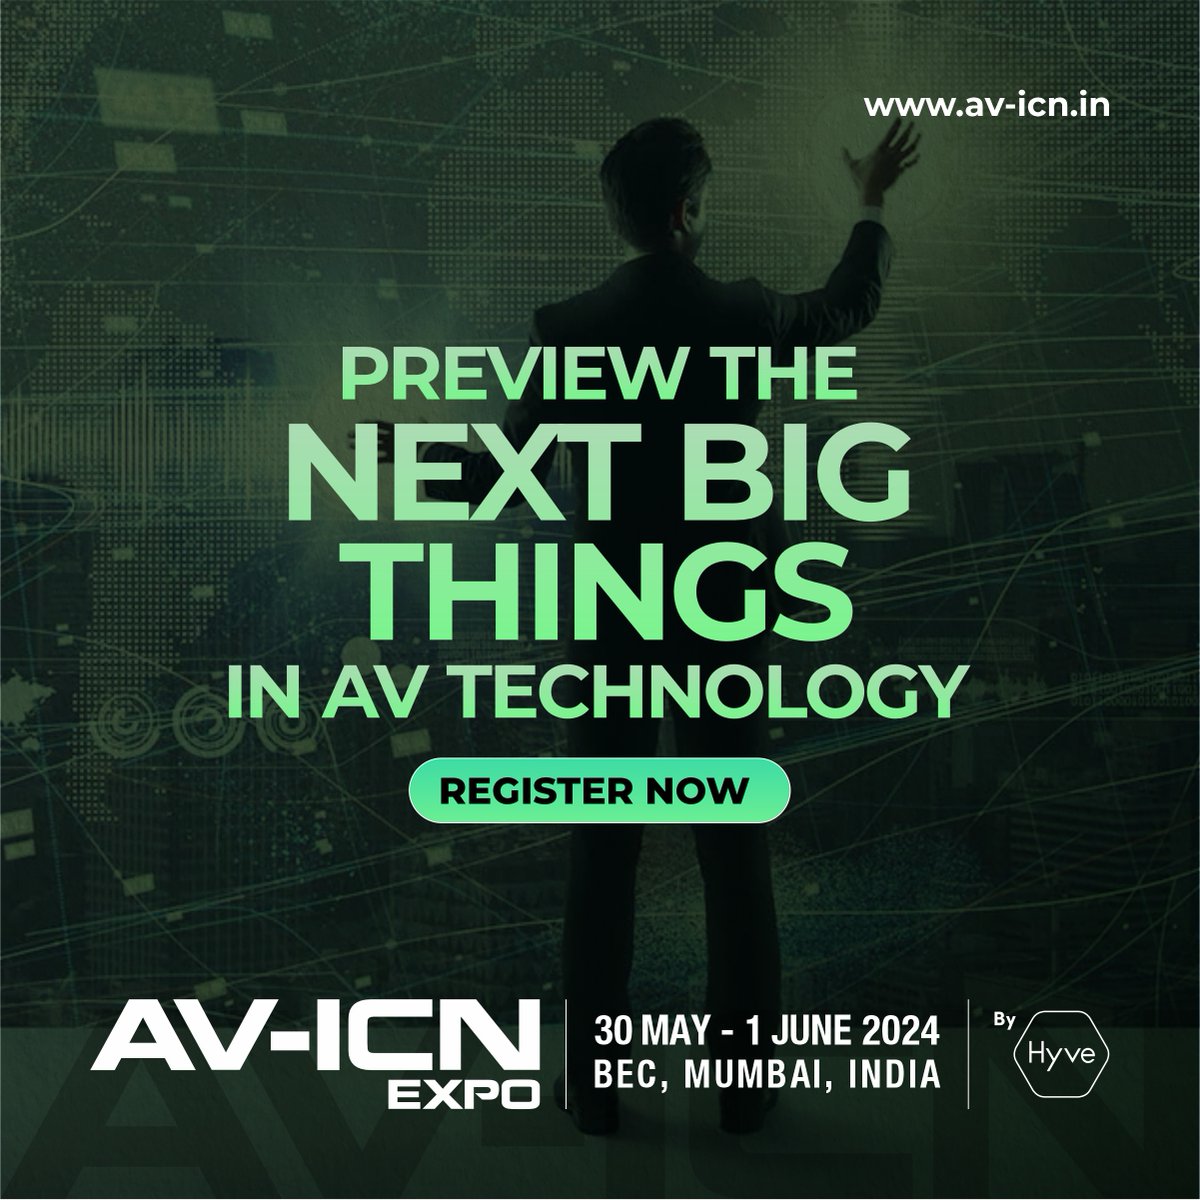 Be the first to experience the revolution at AV-ICN Expo 2024!
Join us in Mumbai for a glimpse into the extraordinary – Register now and lead the change!
#AVICNExpo2024 #FutureOfAV #TechInnovation #MumbaiExpo